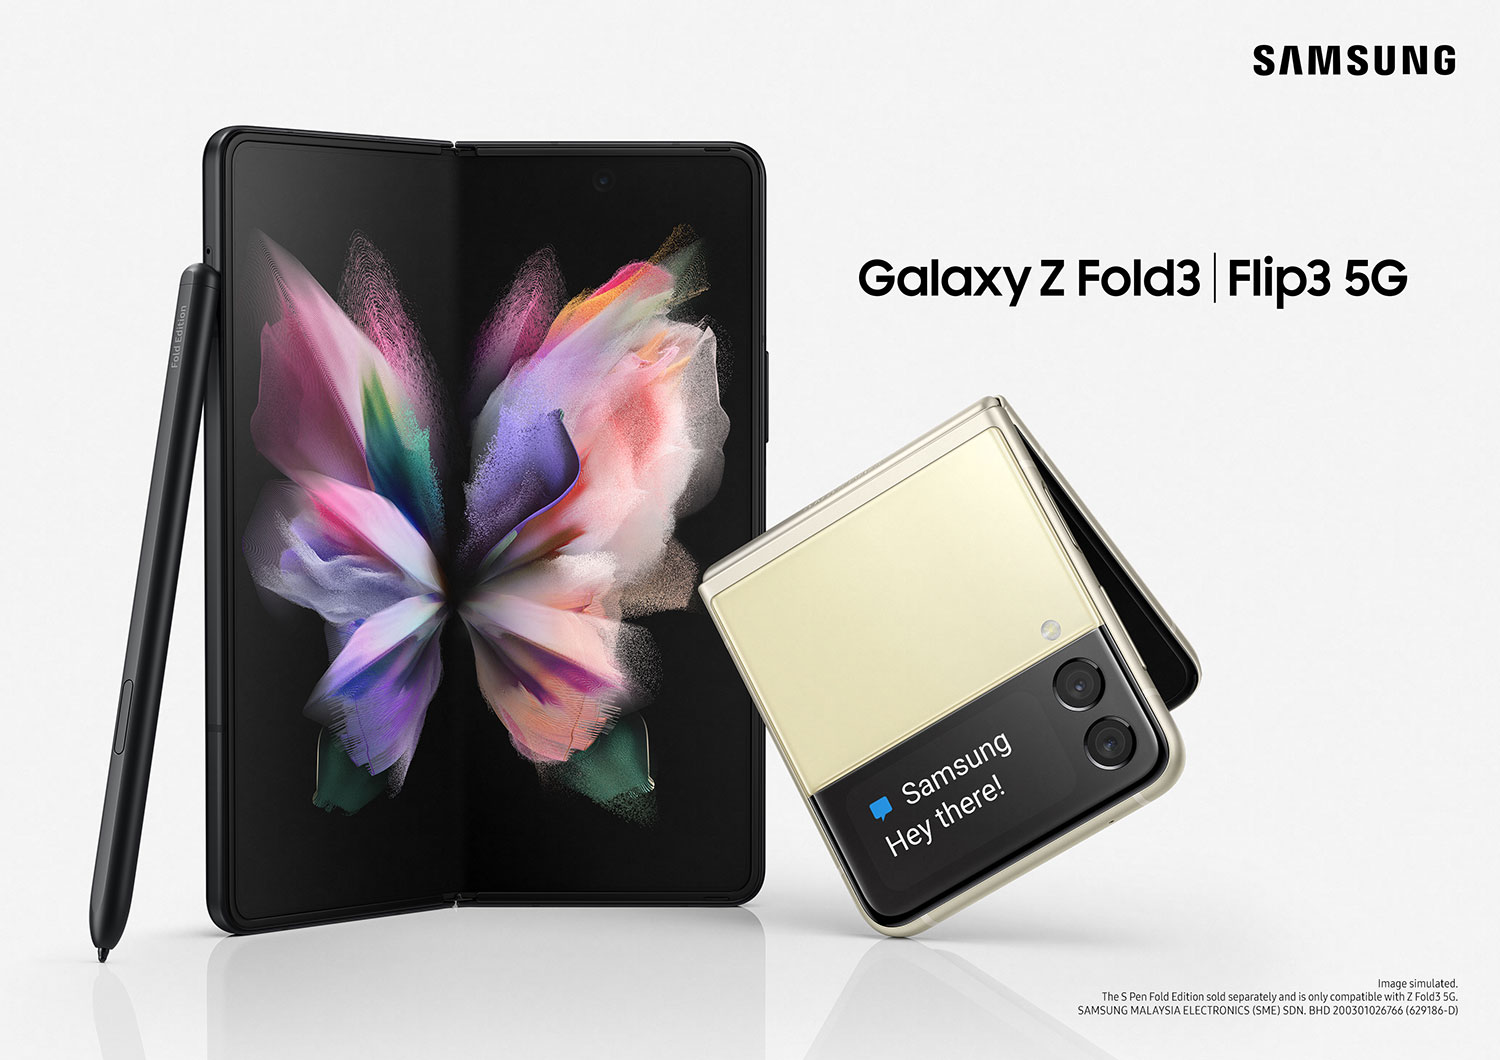 Samsung Galaxy Z Fold3 and Galaxy Z Flip3 Officially Announced